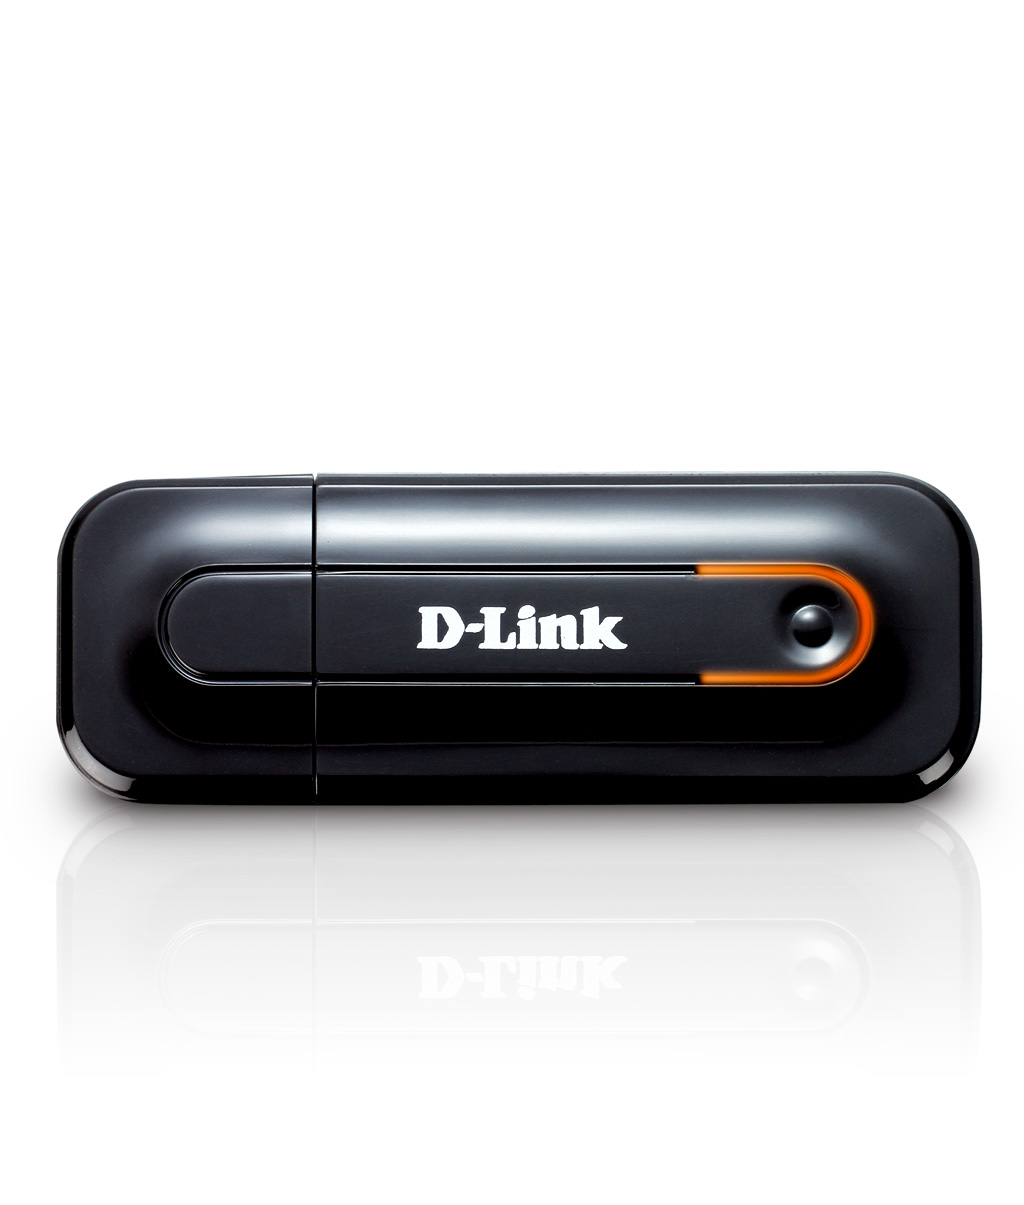 D-LINK DWA-123 WIRELESS USB ADAPTER WINDOWS 7 DRIVER DOWNLOAD